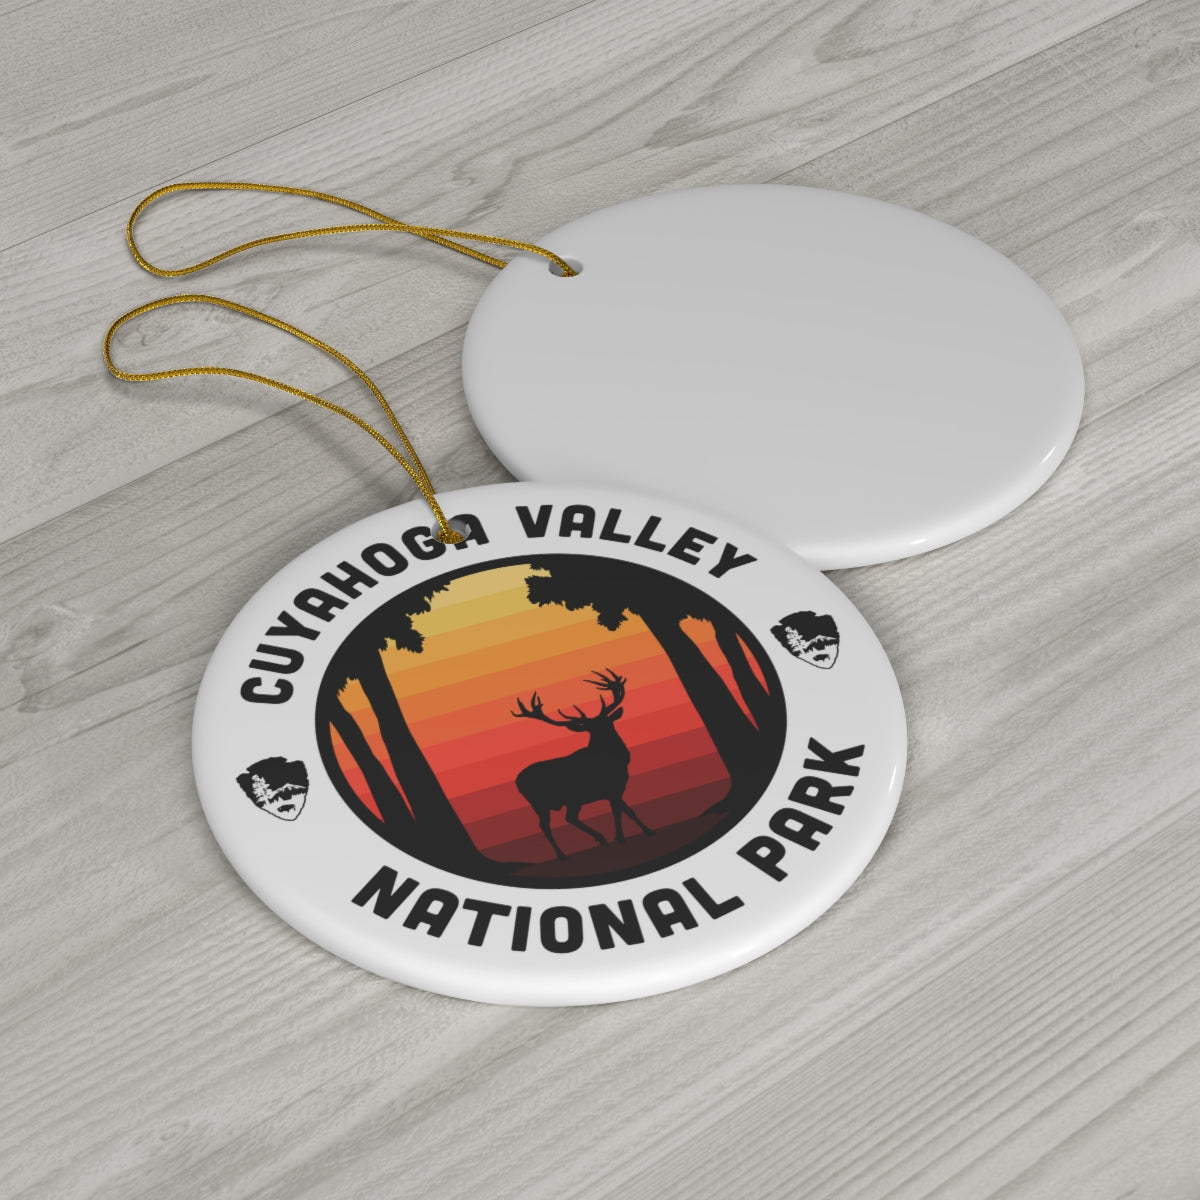 Cuyahoga Valley National Park Ornament - Round Emblem Design